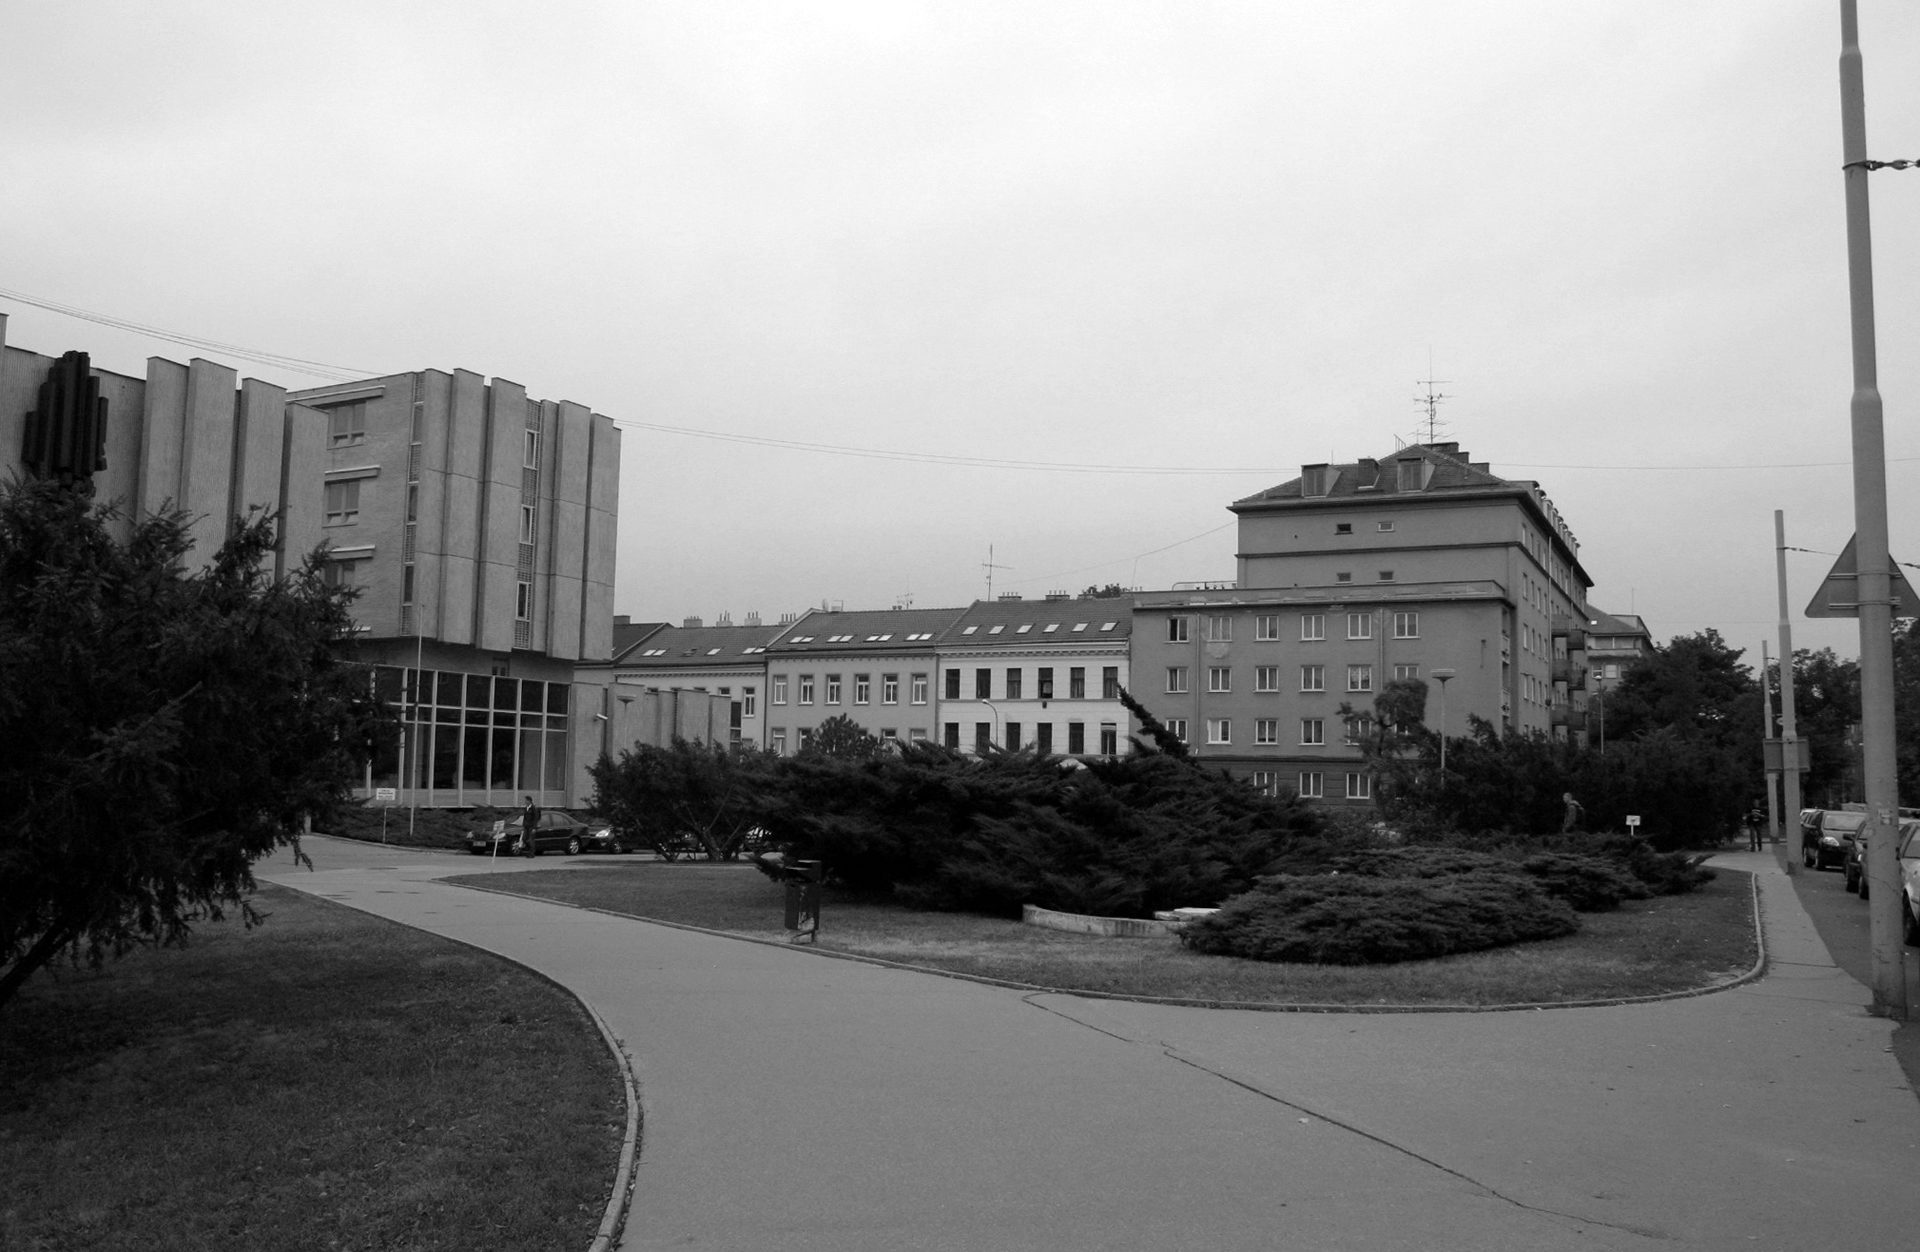 Faculty of Informatics, Masaryk University, Brno